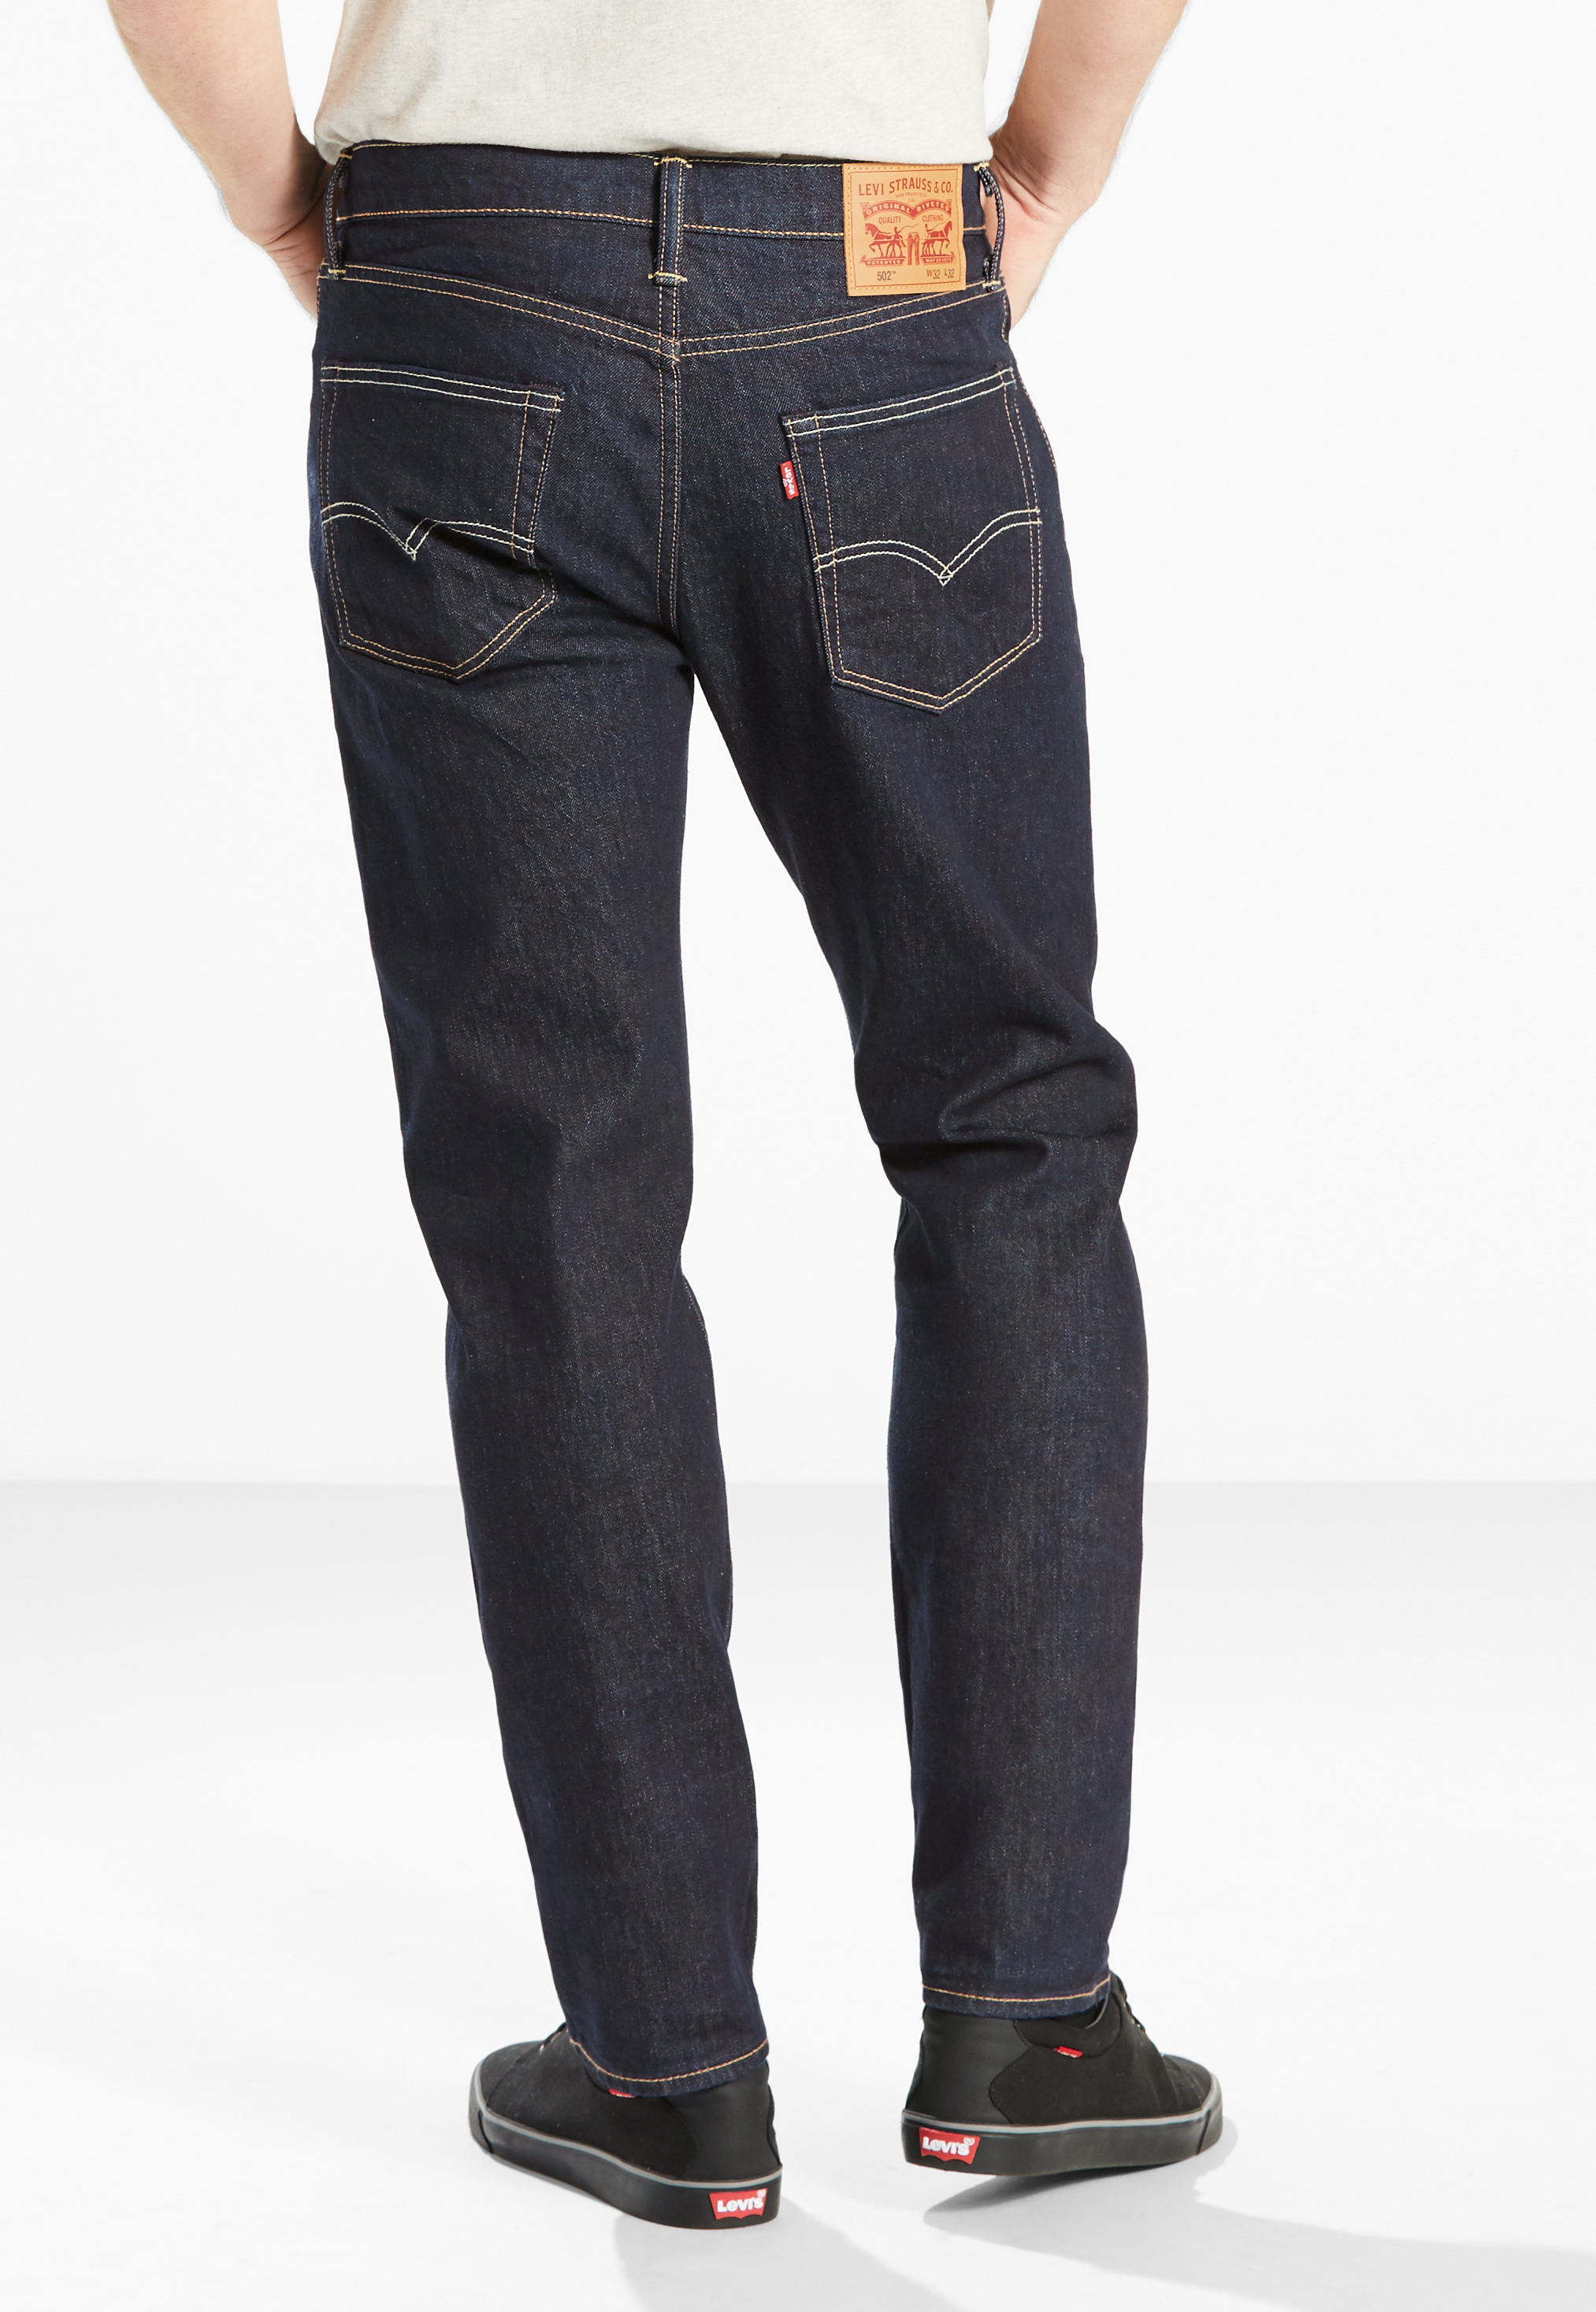 LEVIS Jeanshose Jeans 29507-0020 502 REGULAR TAPERCHAIN RINSE W18-LJJ1